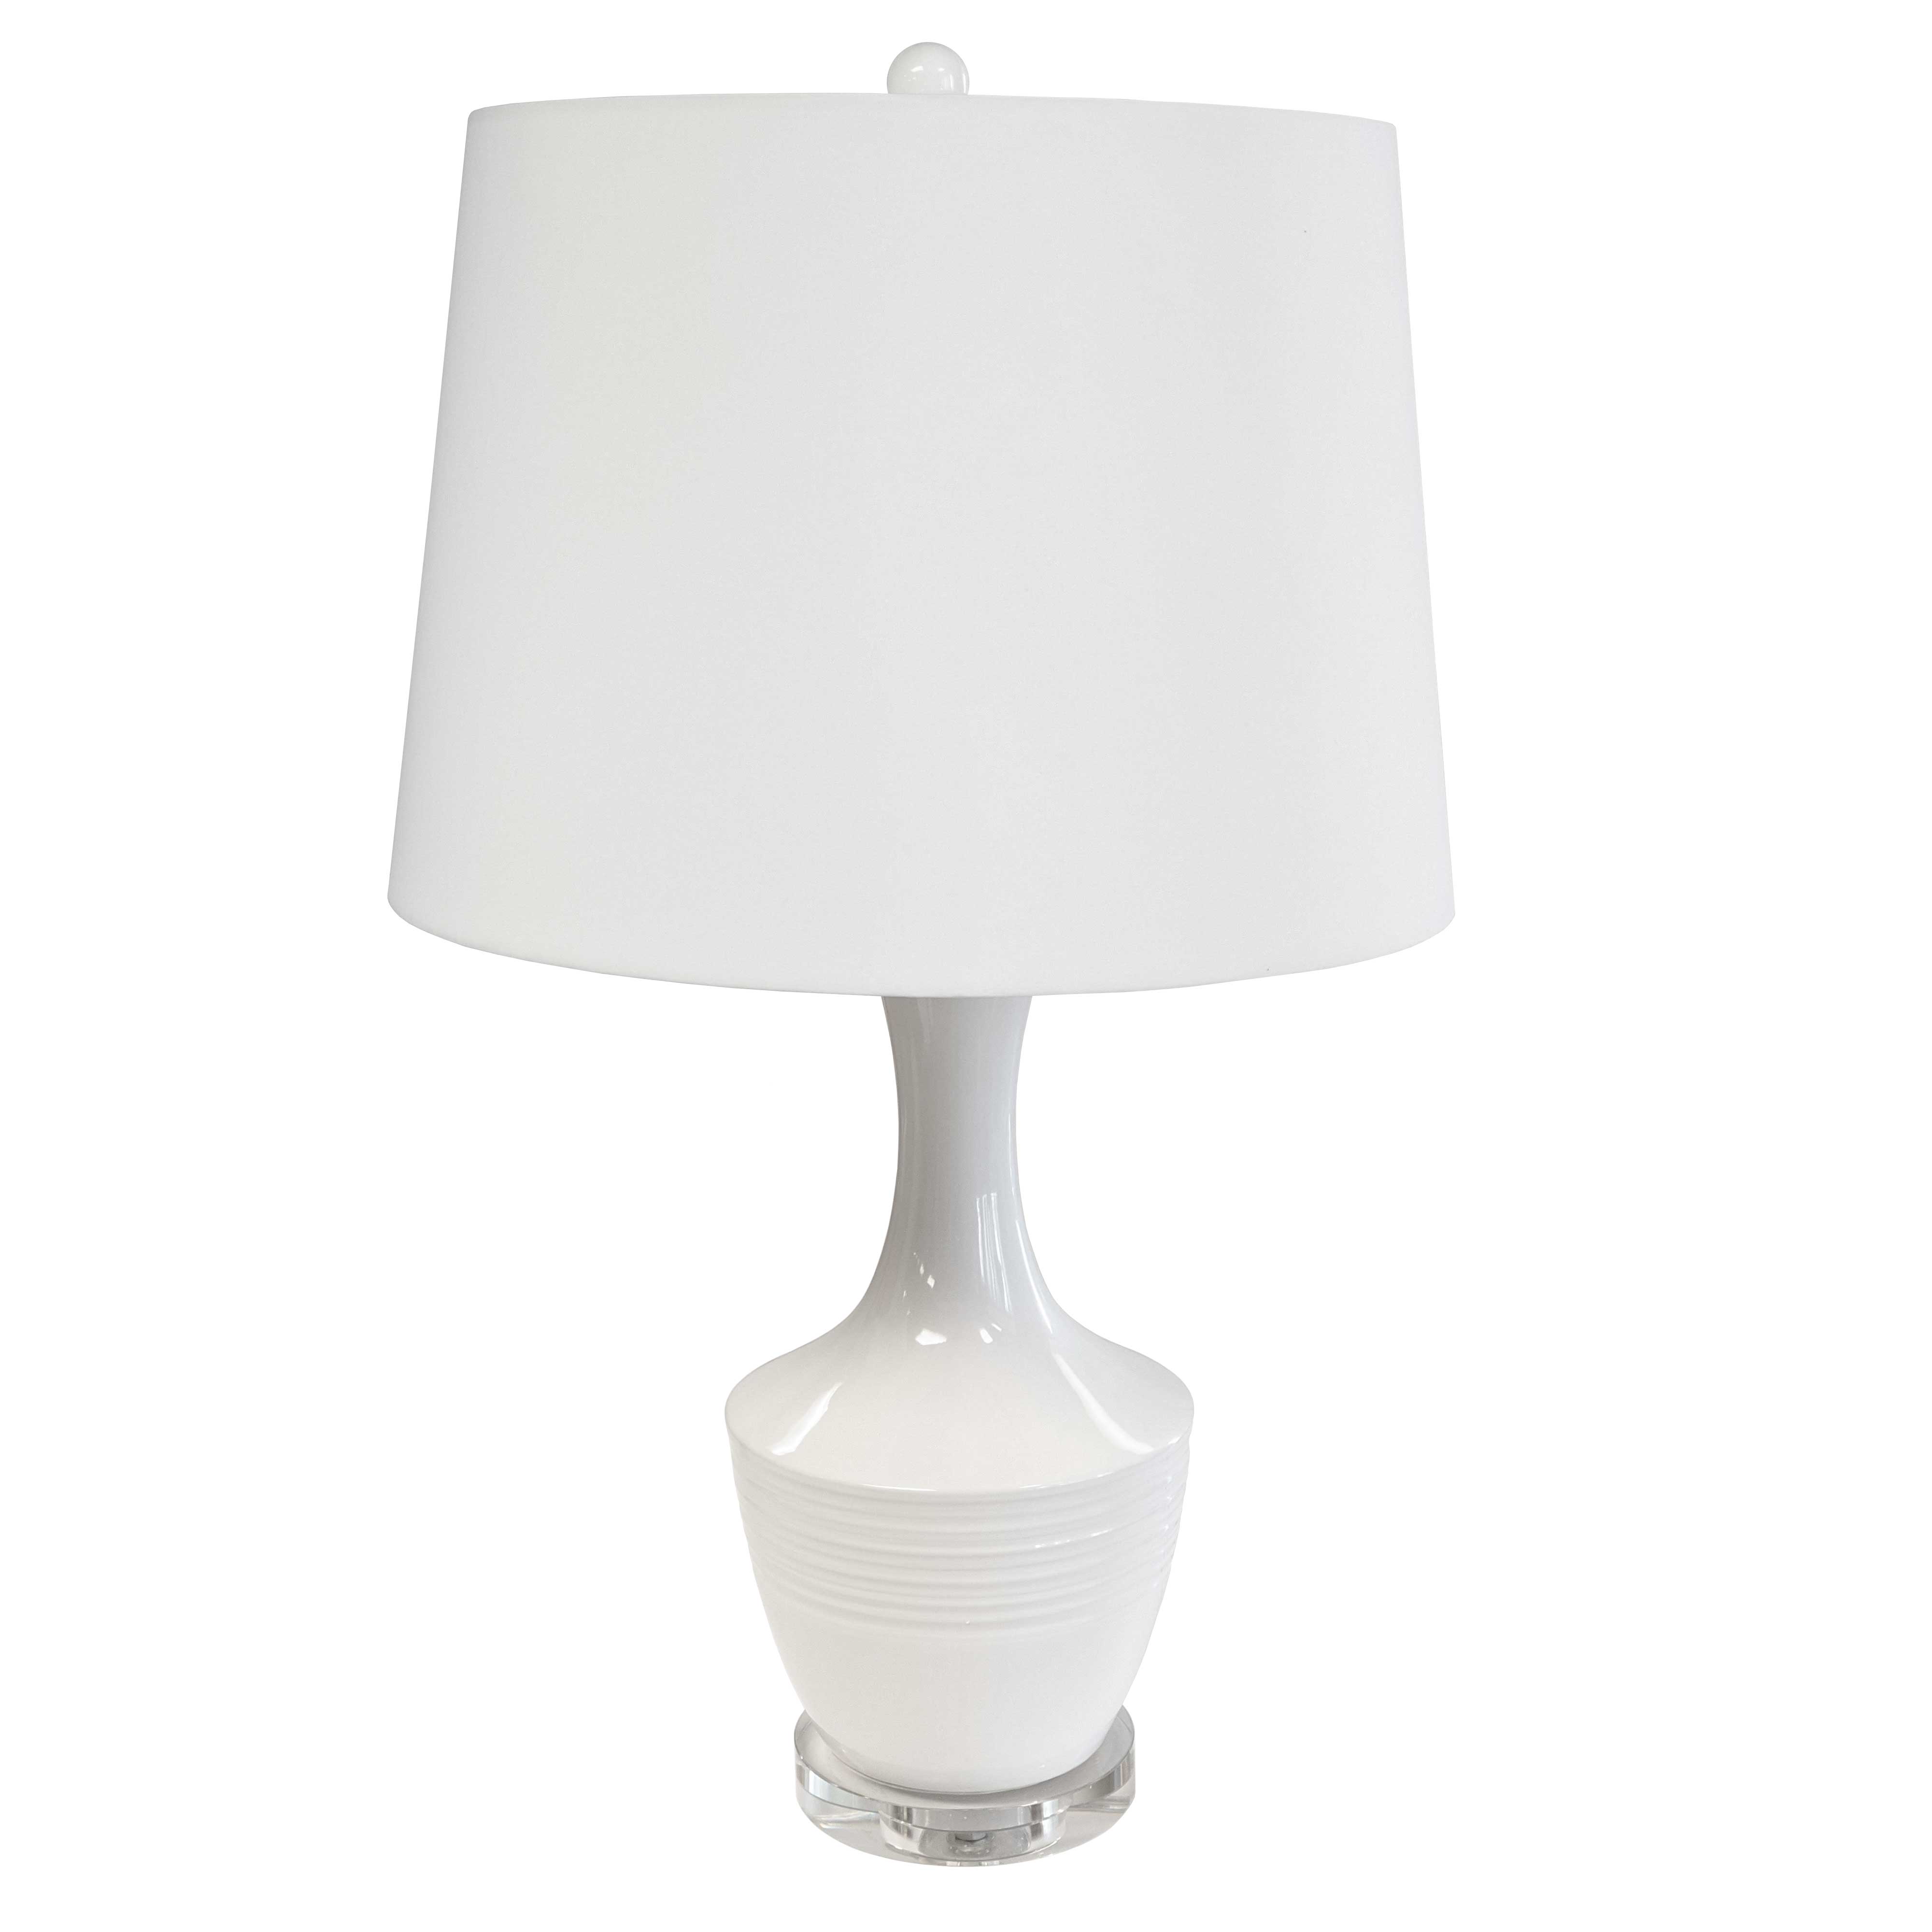 1 Light Ceramic Oversized Table Lamp, White Finish